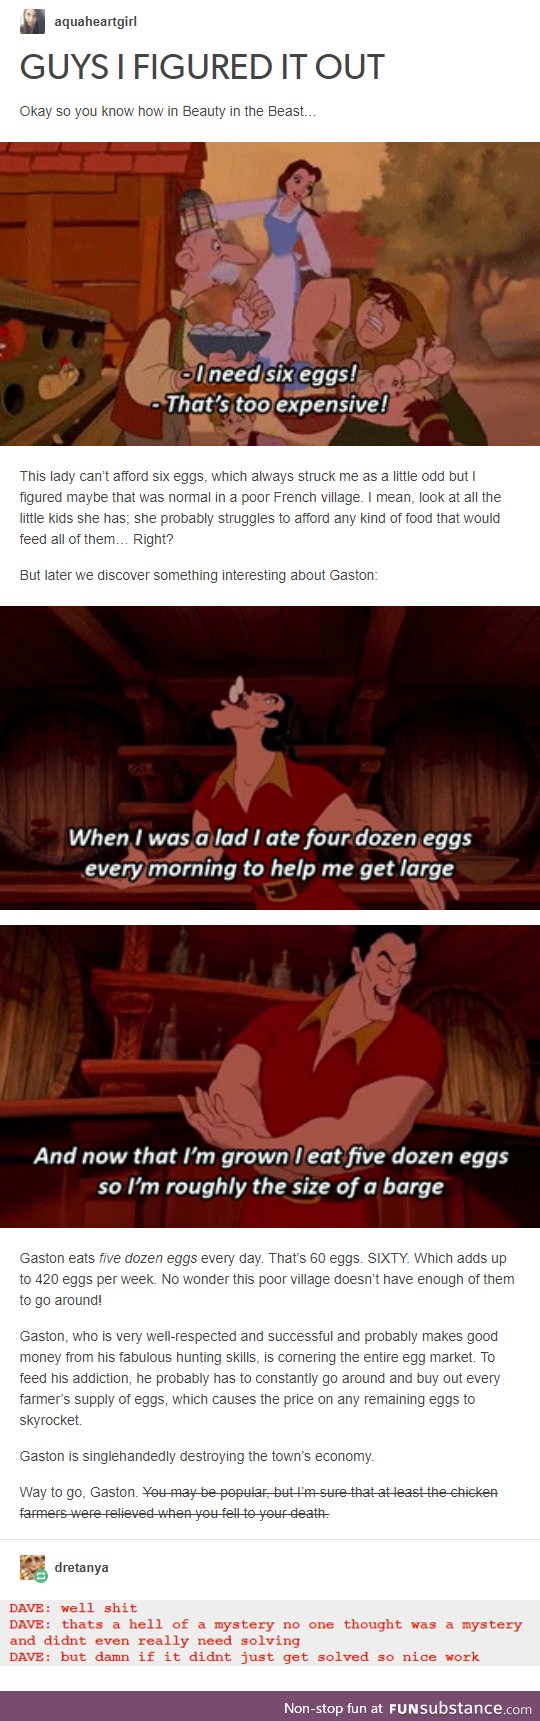 Gaston's got the entire egg market cornered